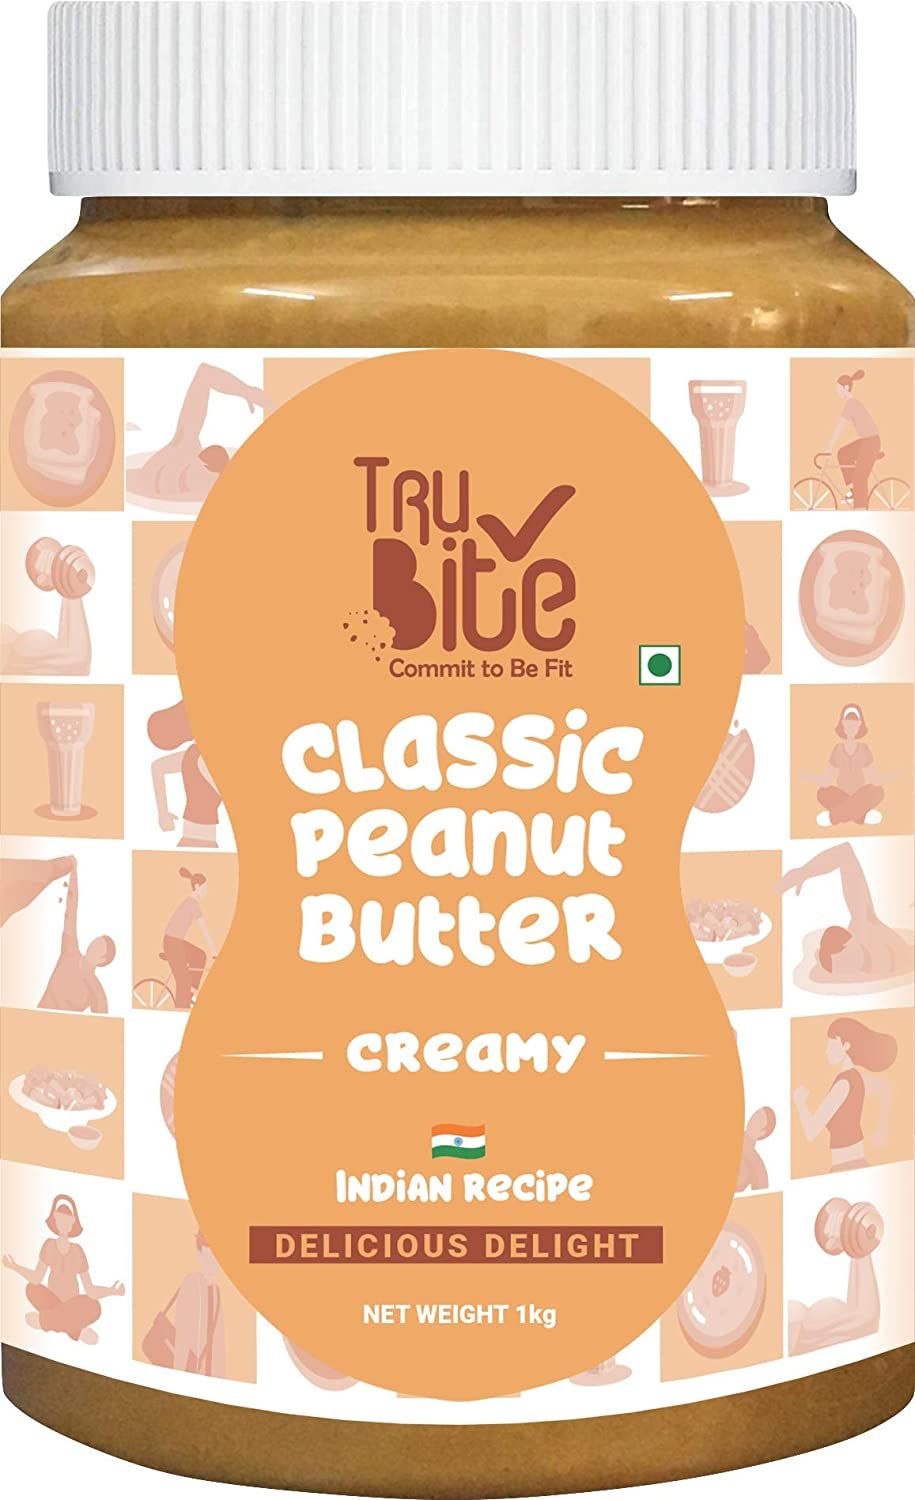 Trubite Classis Peanut Butter Creamy Image